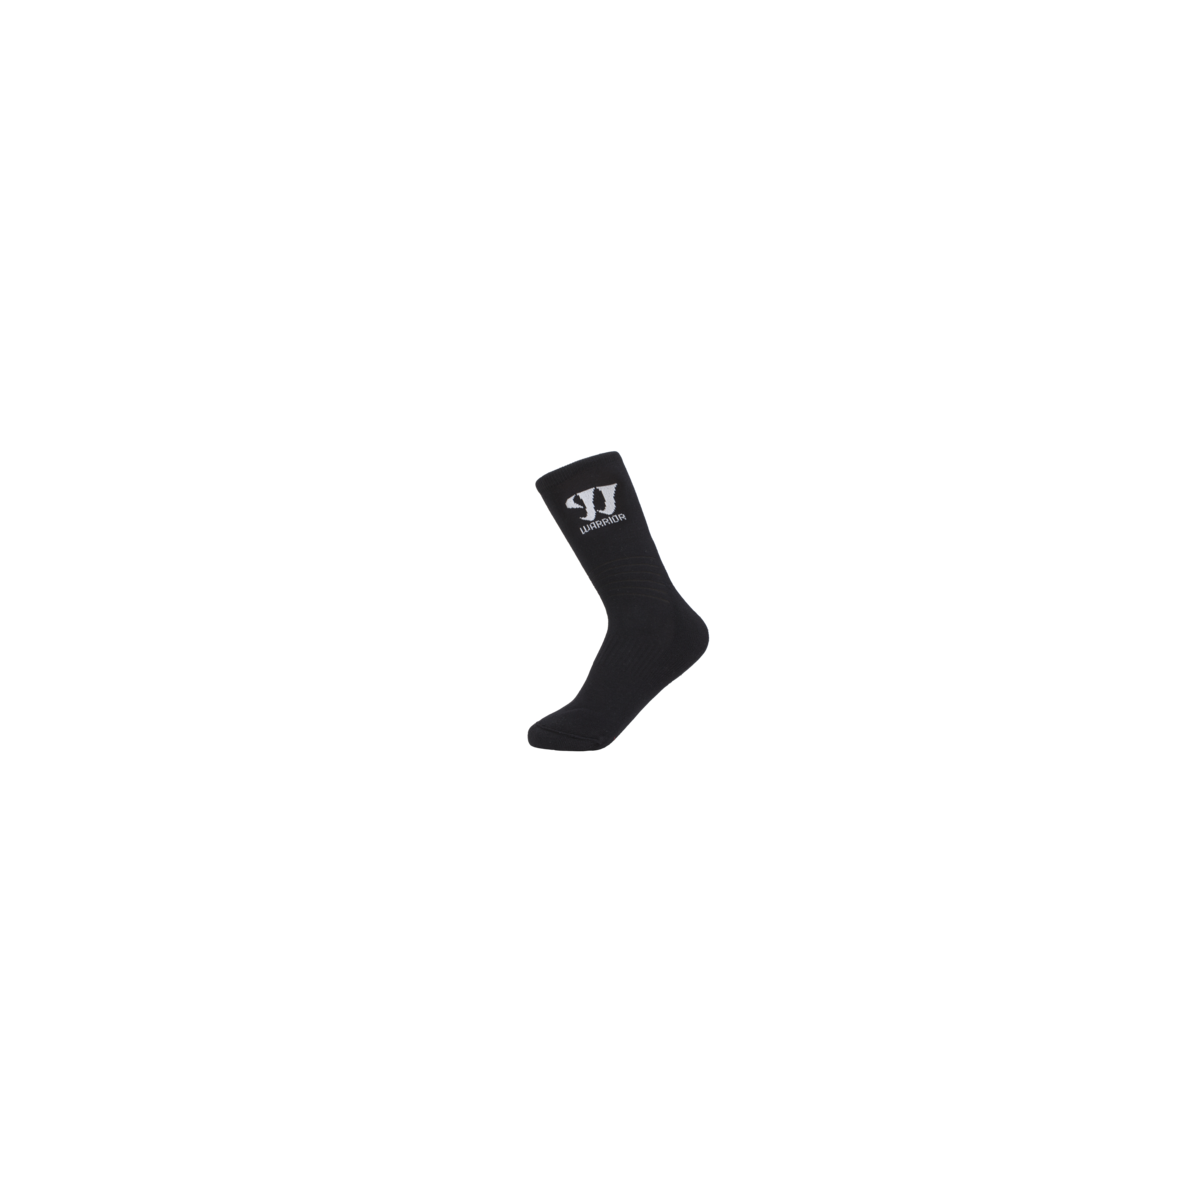 Warrior Ankle Sock 3.Paar